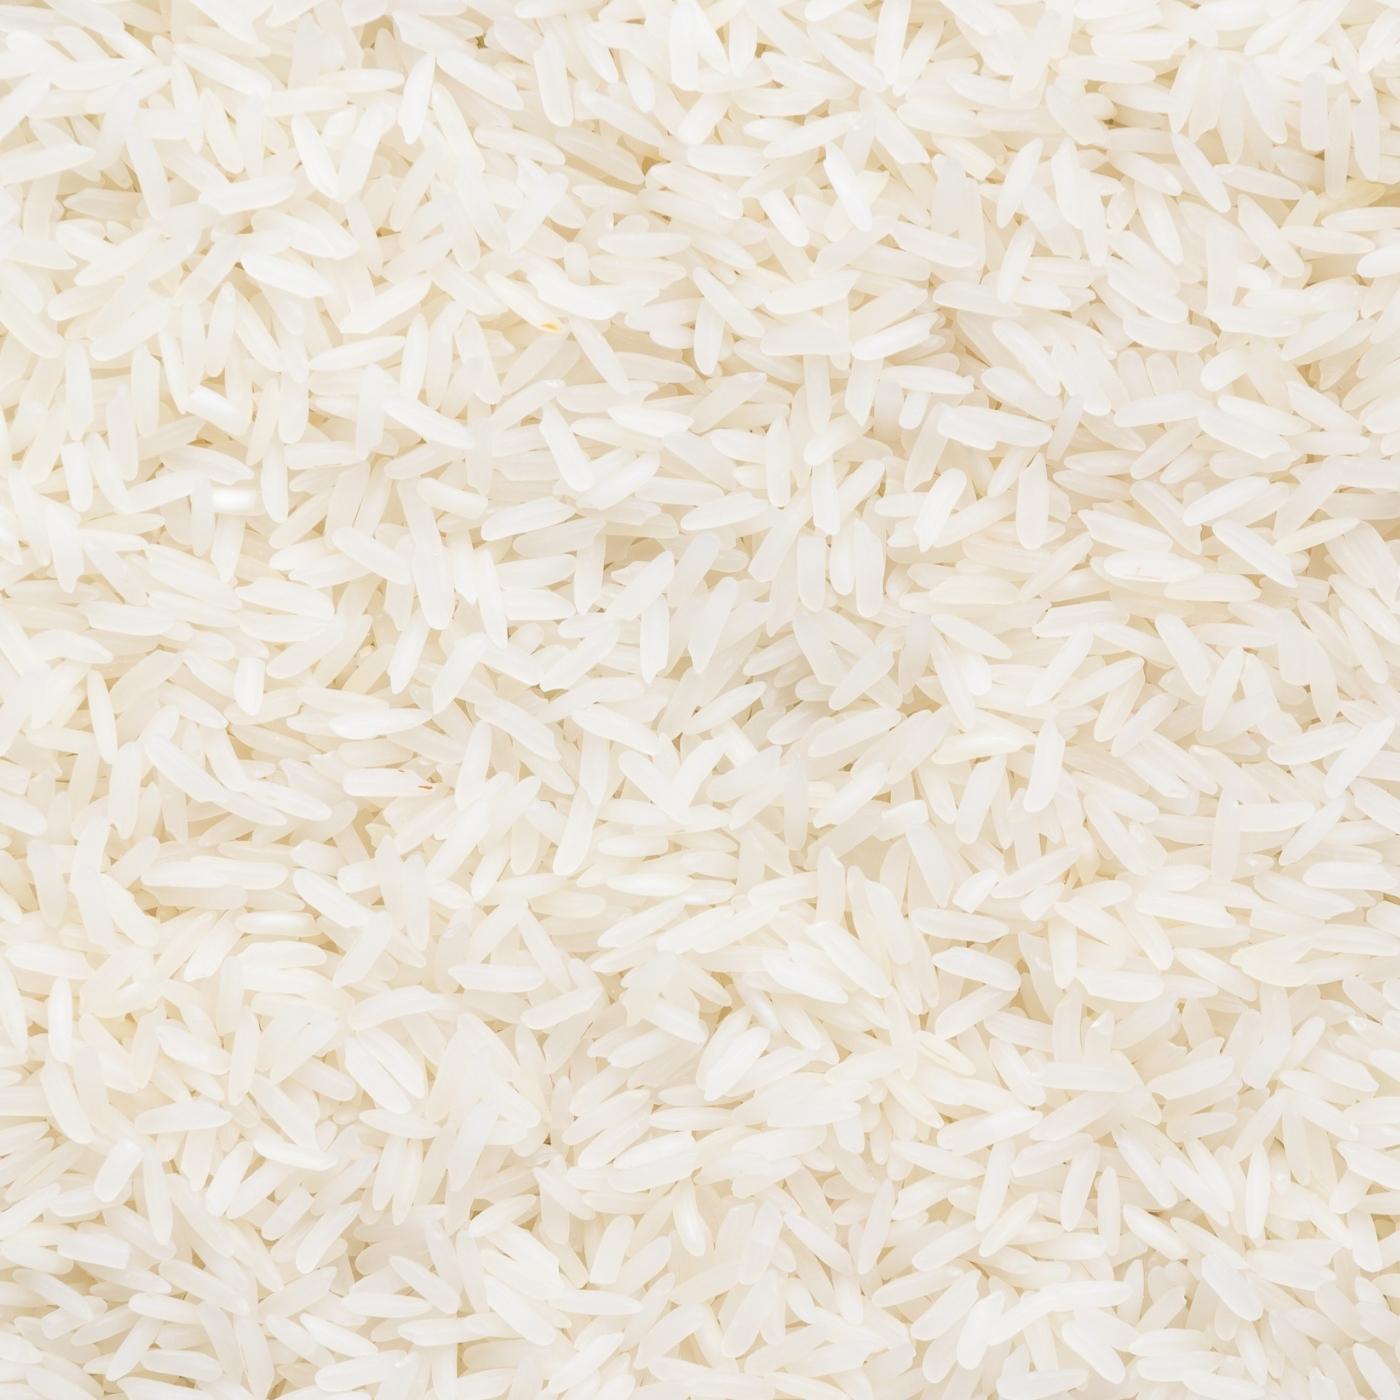 Idly Rice - Organic - Traditional Rice